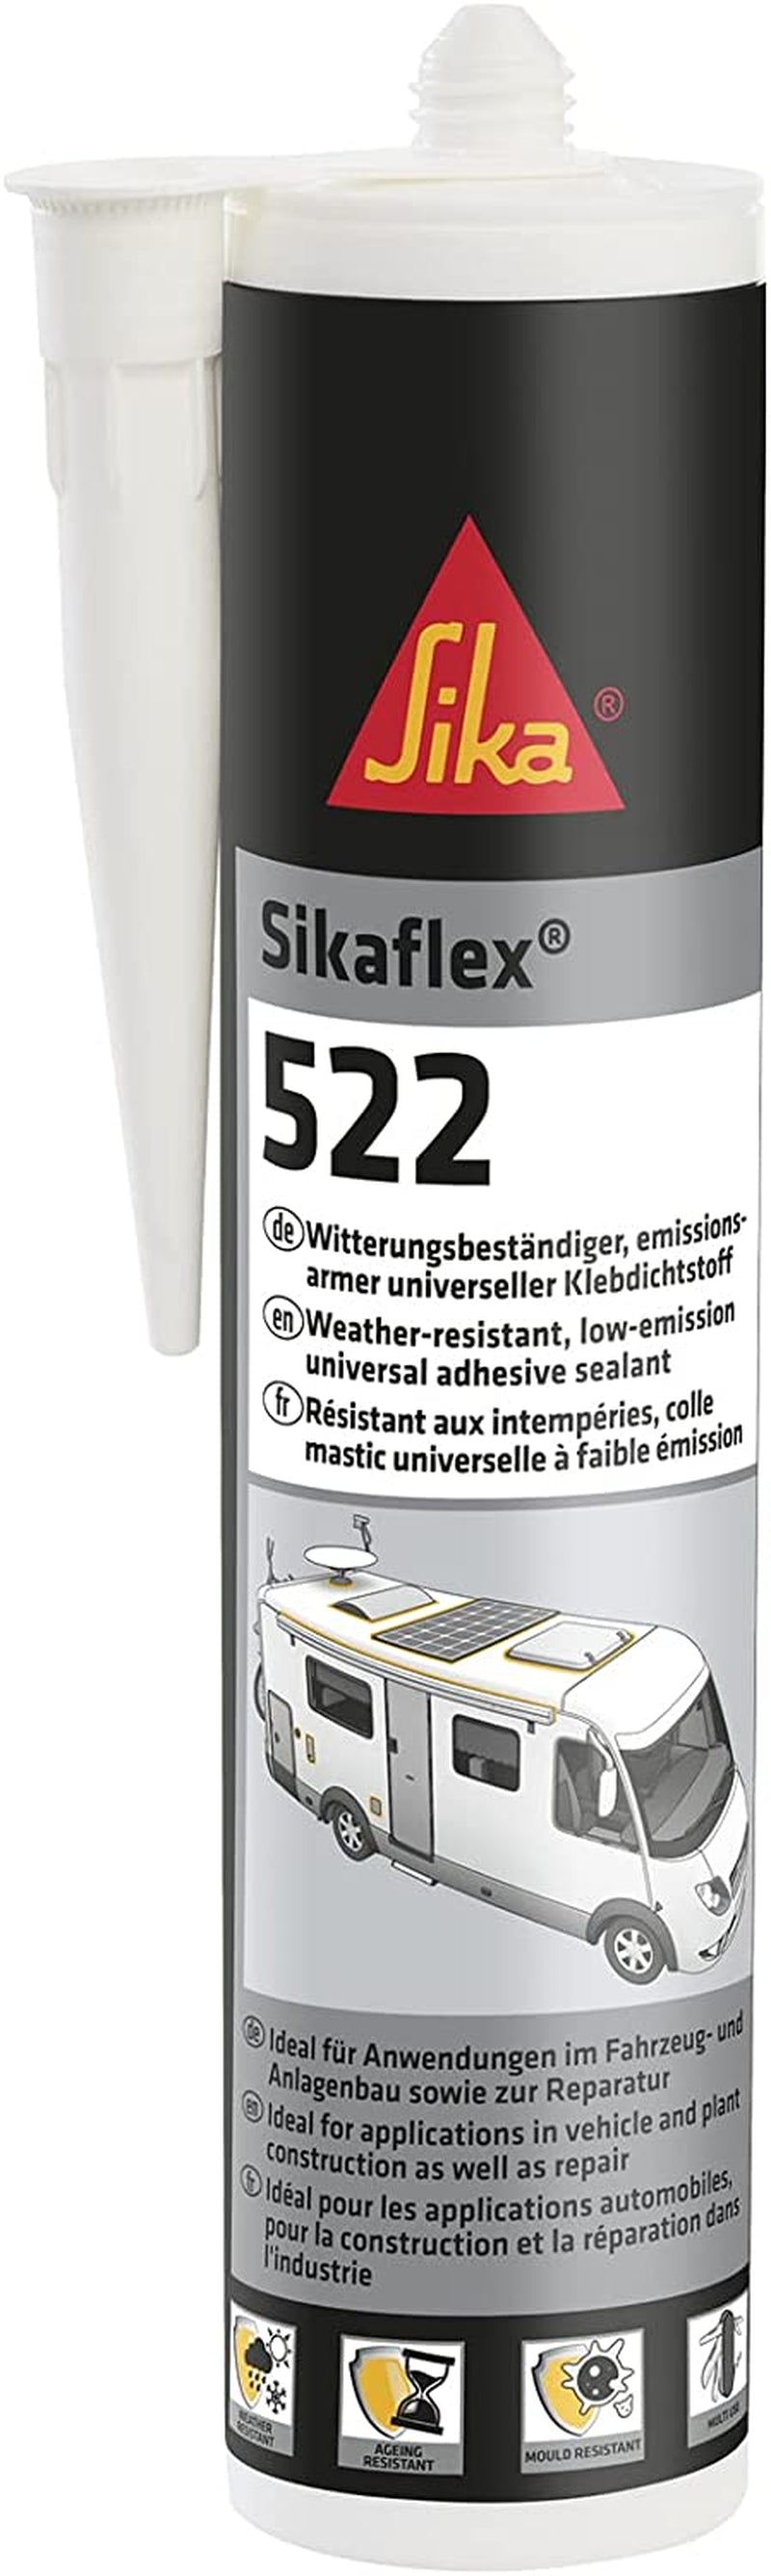 Sikaflex 522 (White) Sealant - Caravan Stuff 4 U